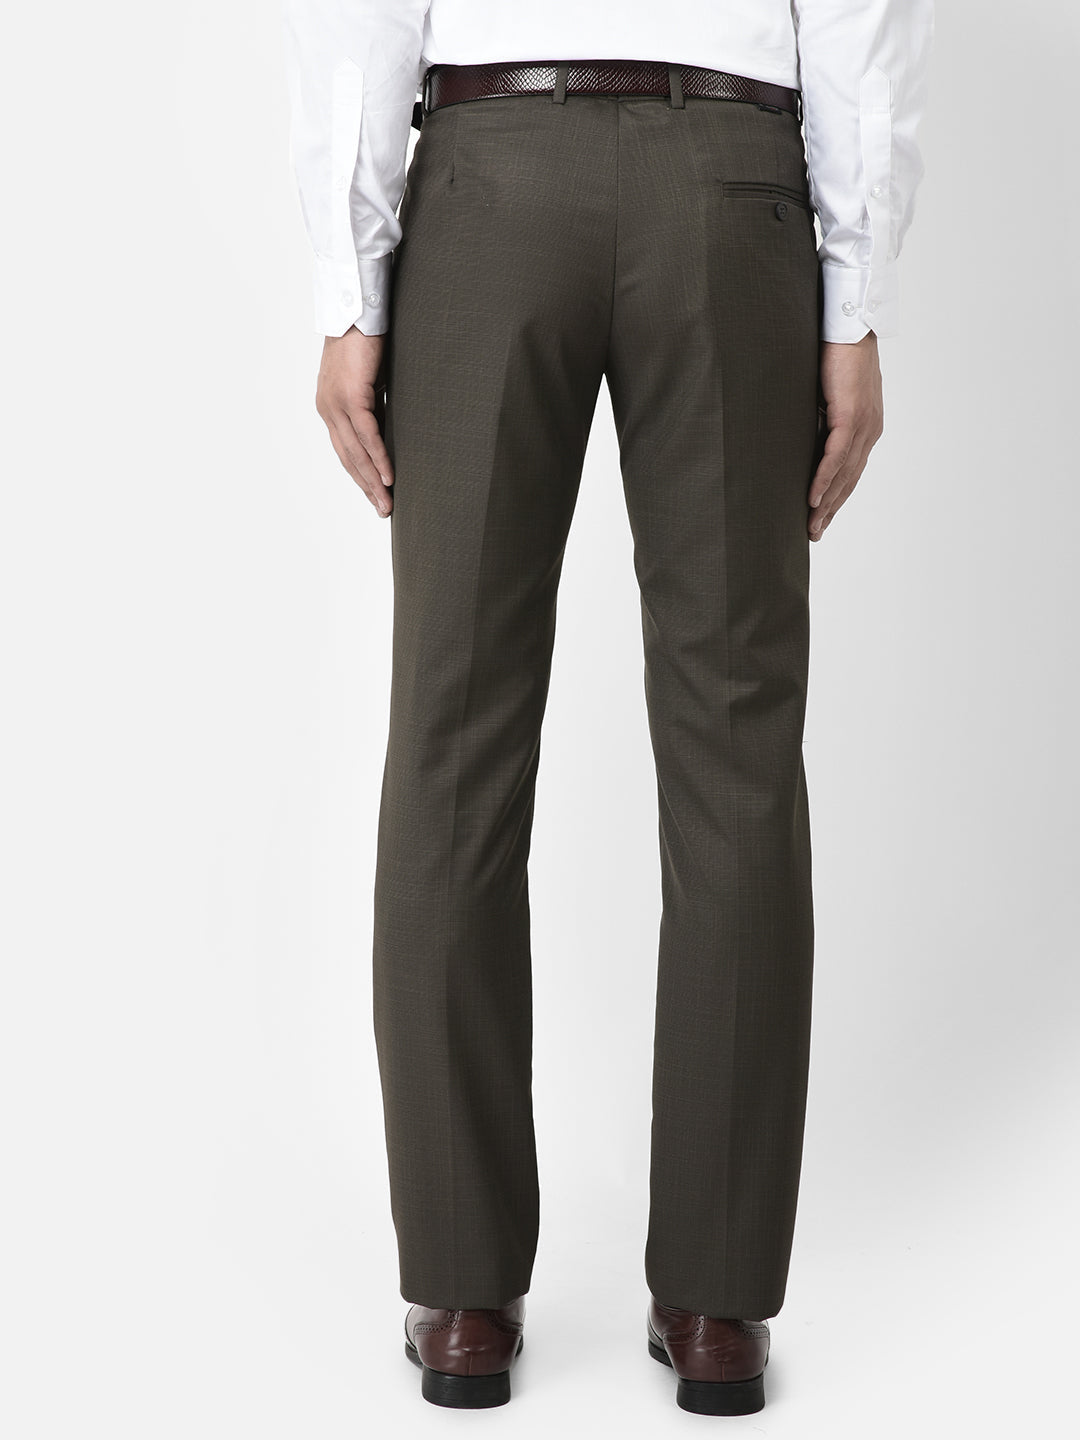 Cobb Brown Ultra Fit Formal Trouser